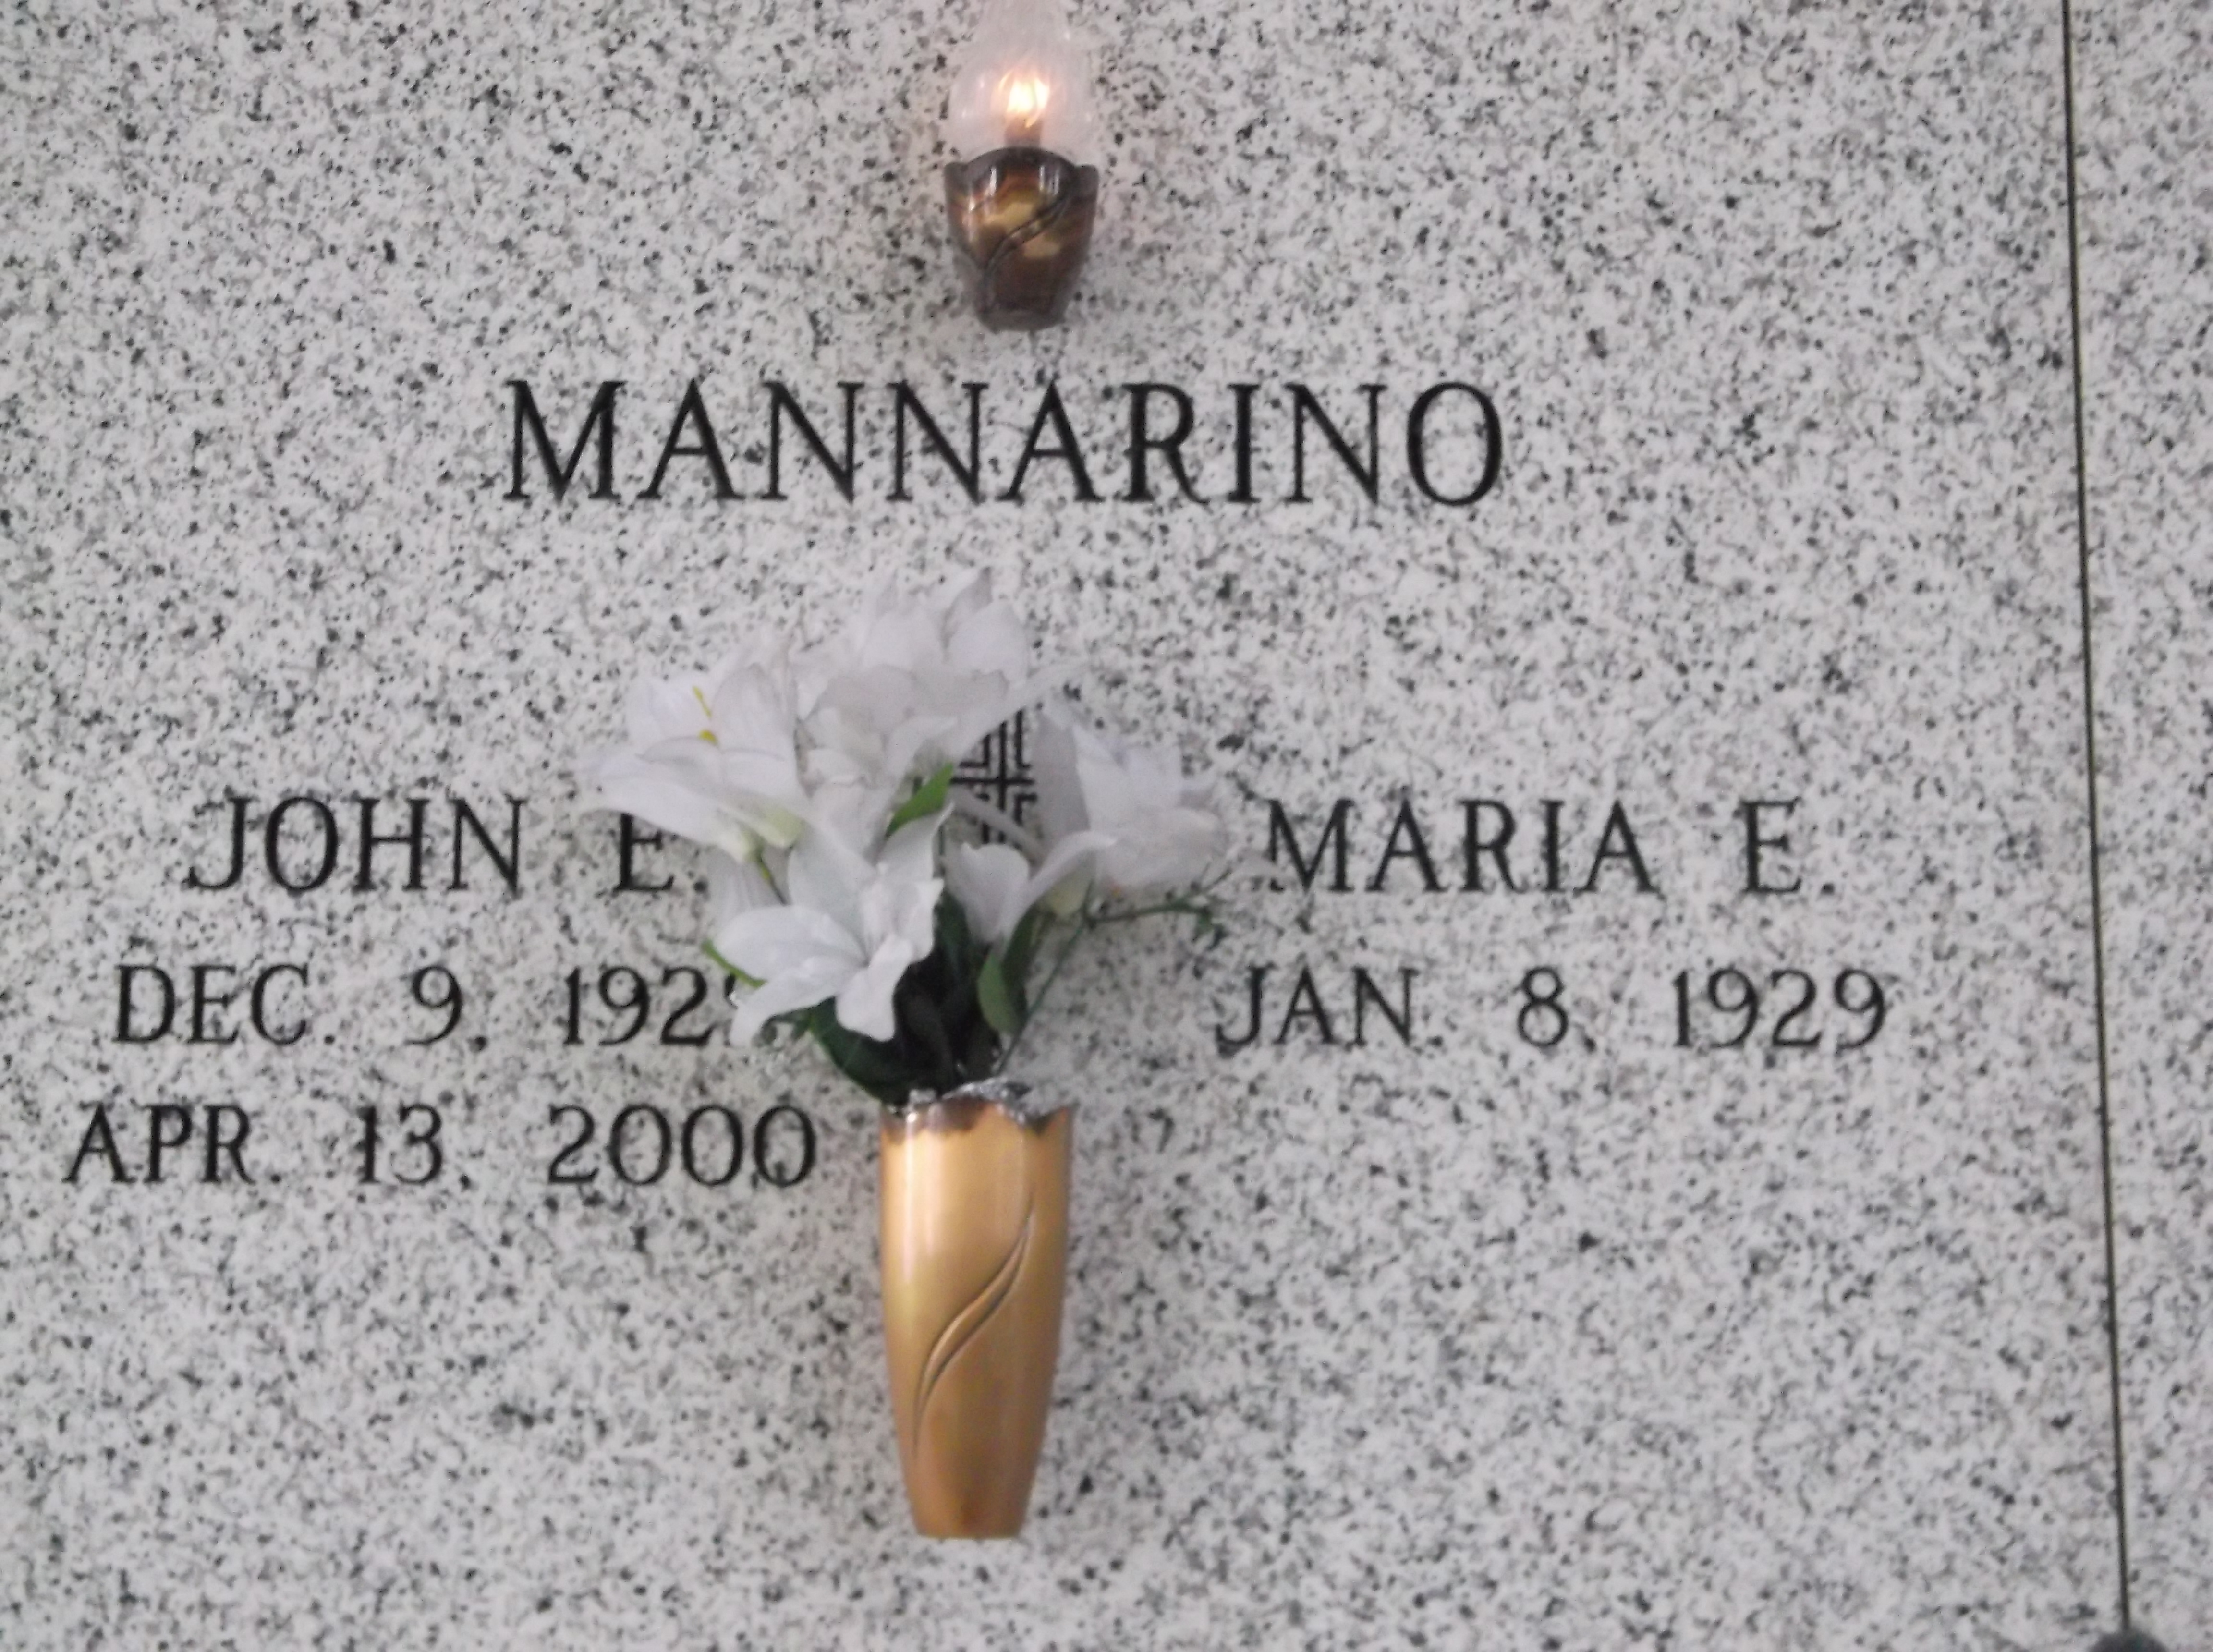 John E Mannarino